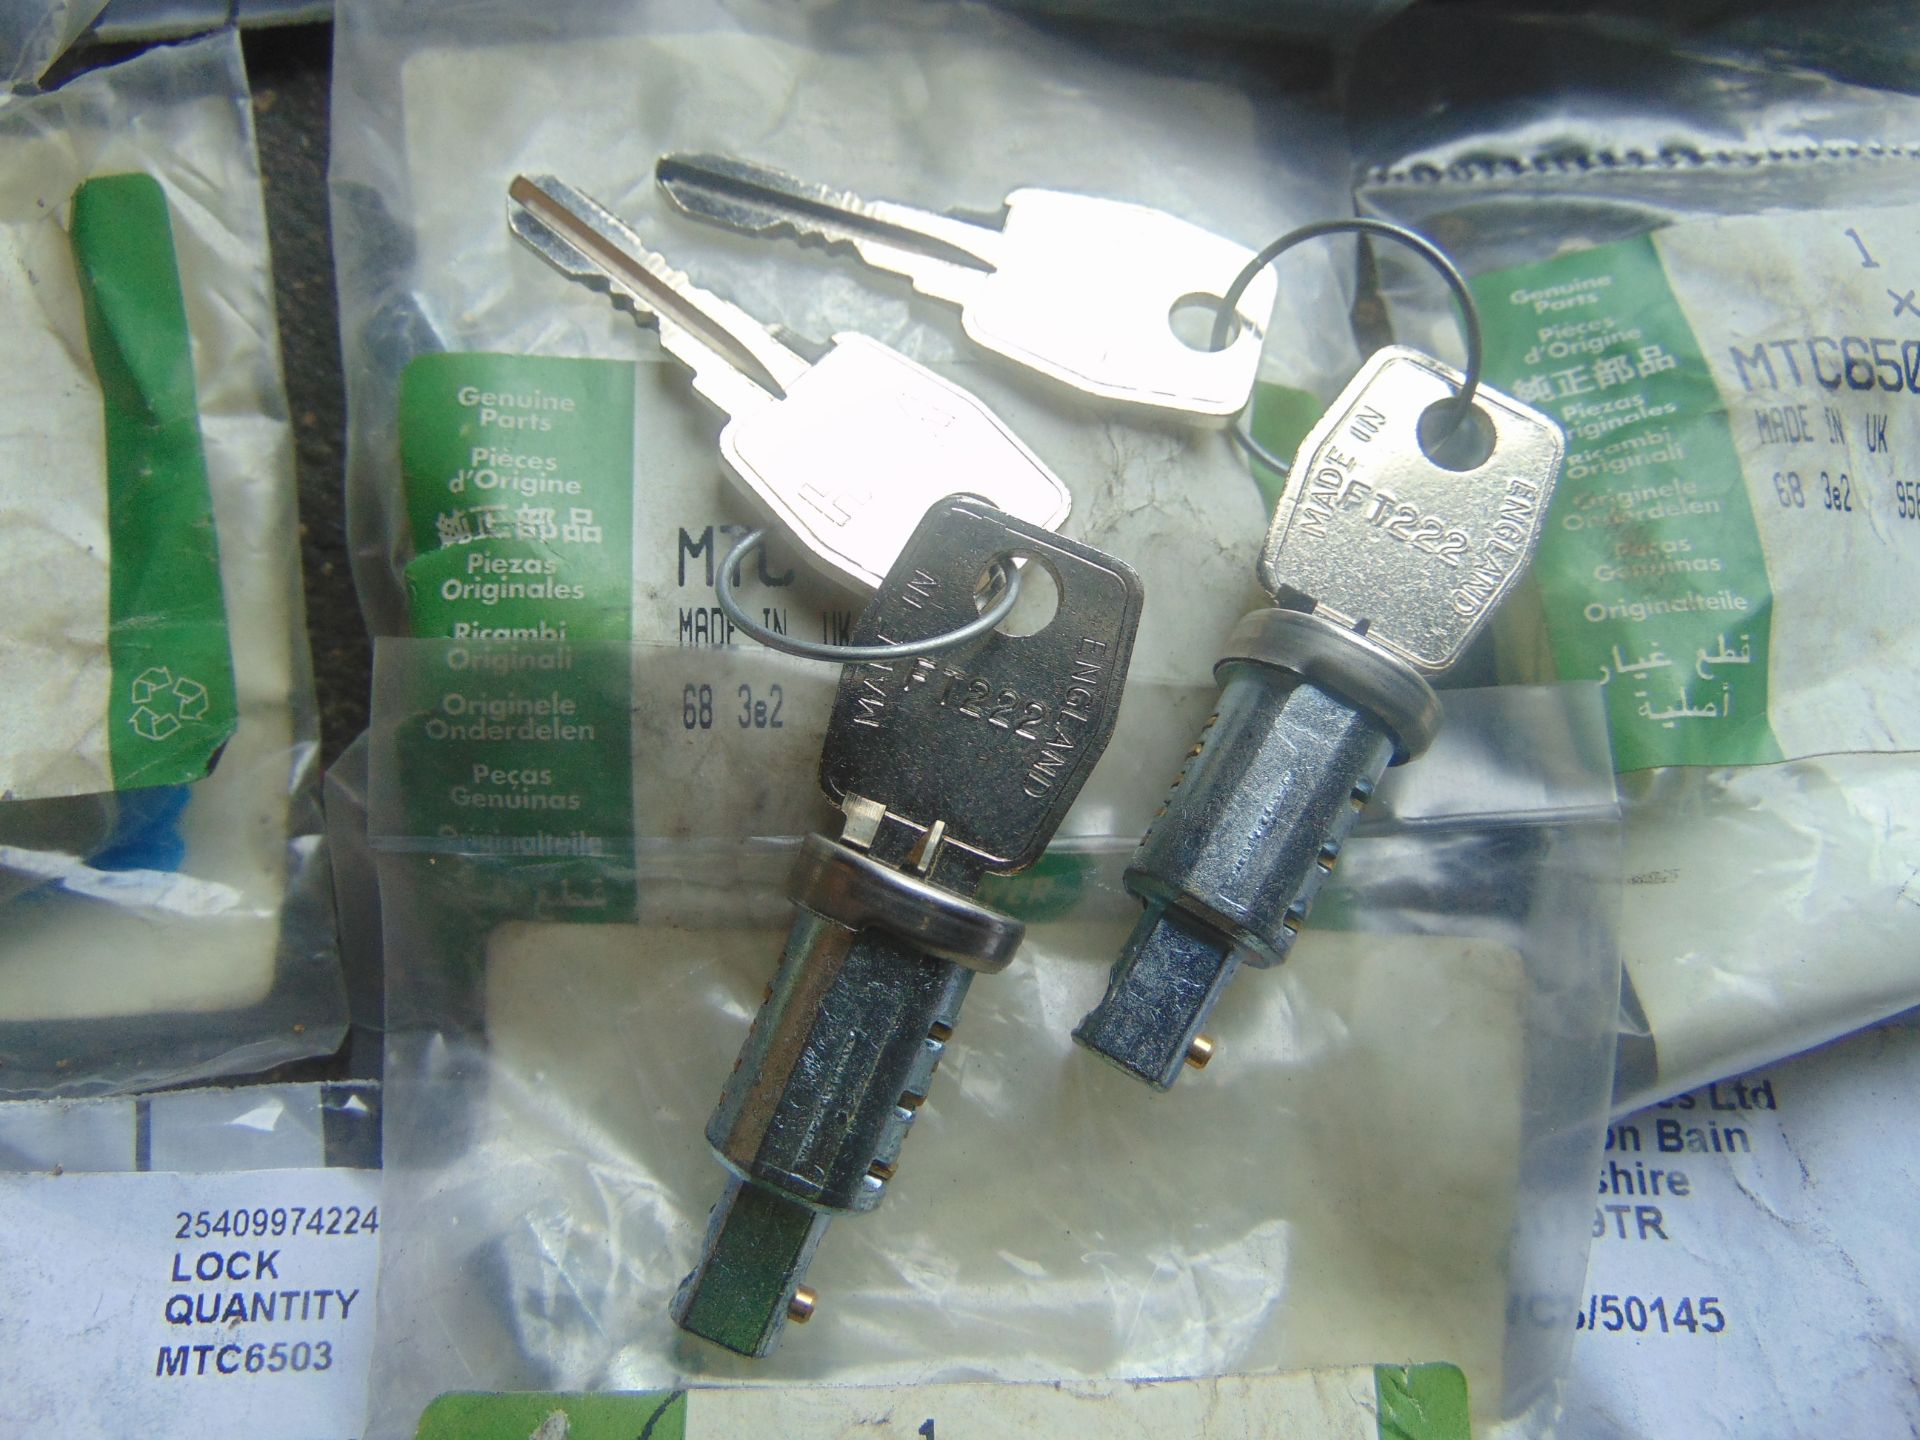 14 x Land Rover Lock and Key Set, Anti-burst Door Lock, 2 Locks P/No MTC 6503 - Image 2 of 4